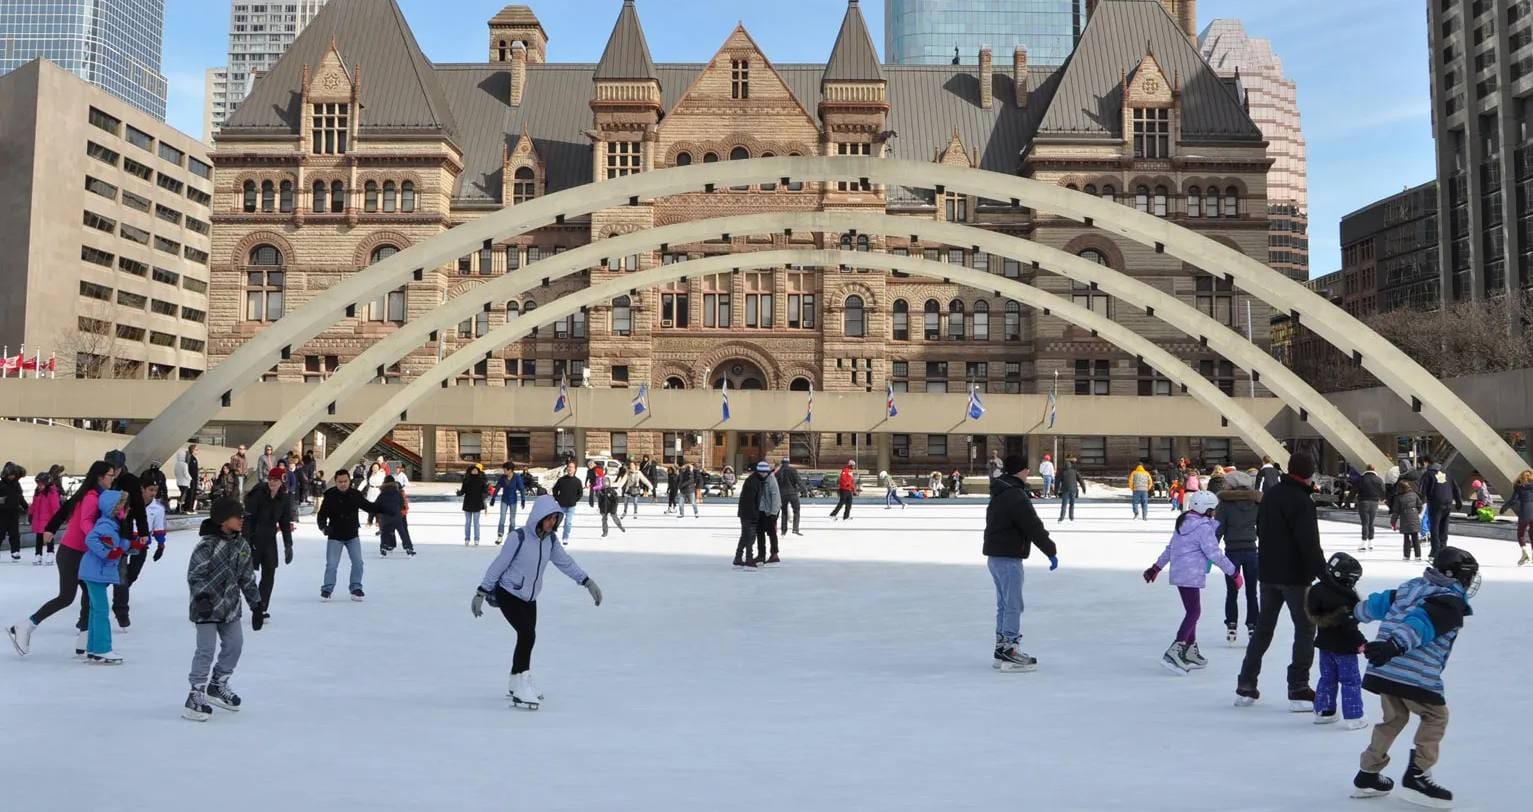 City of Toronto - Skaters at City Hall